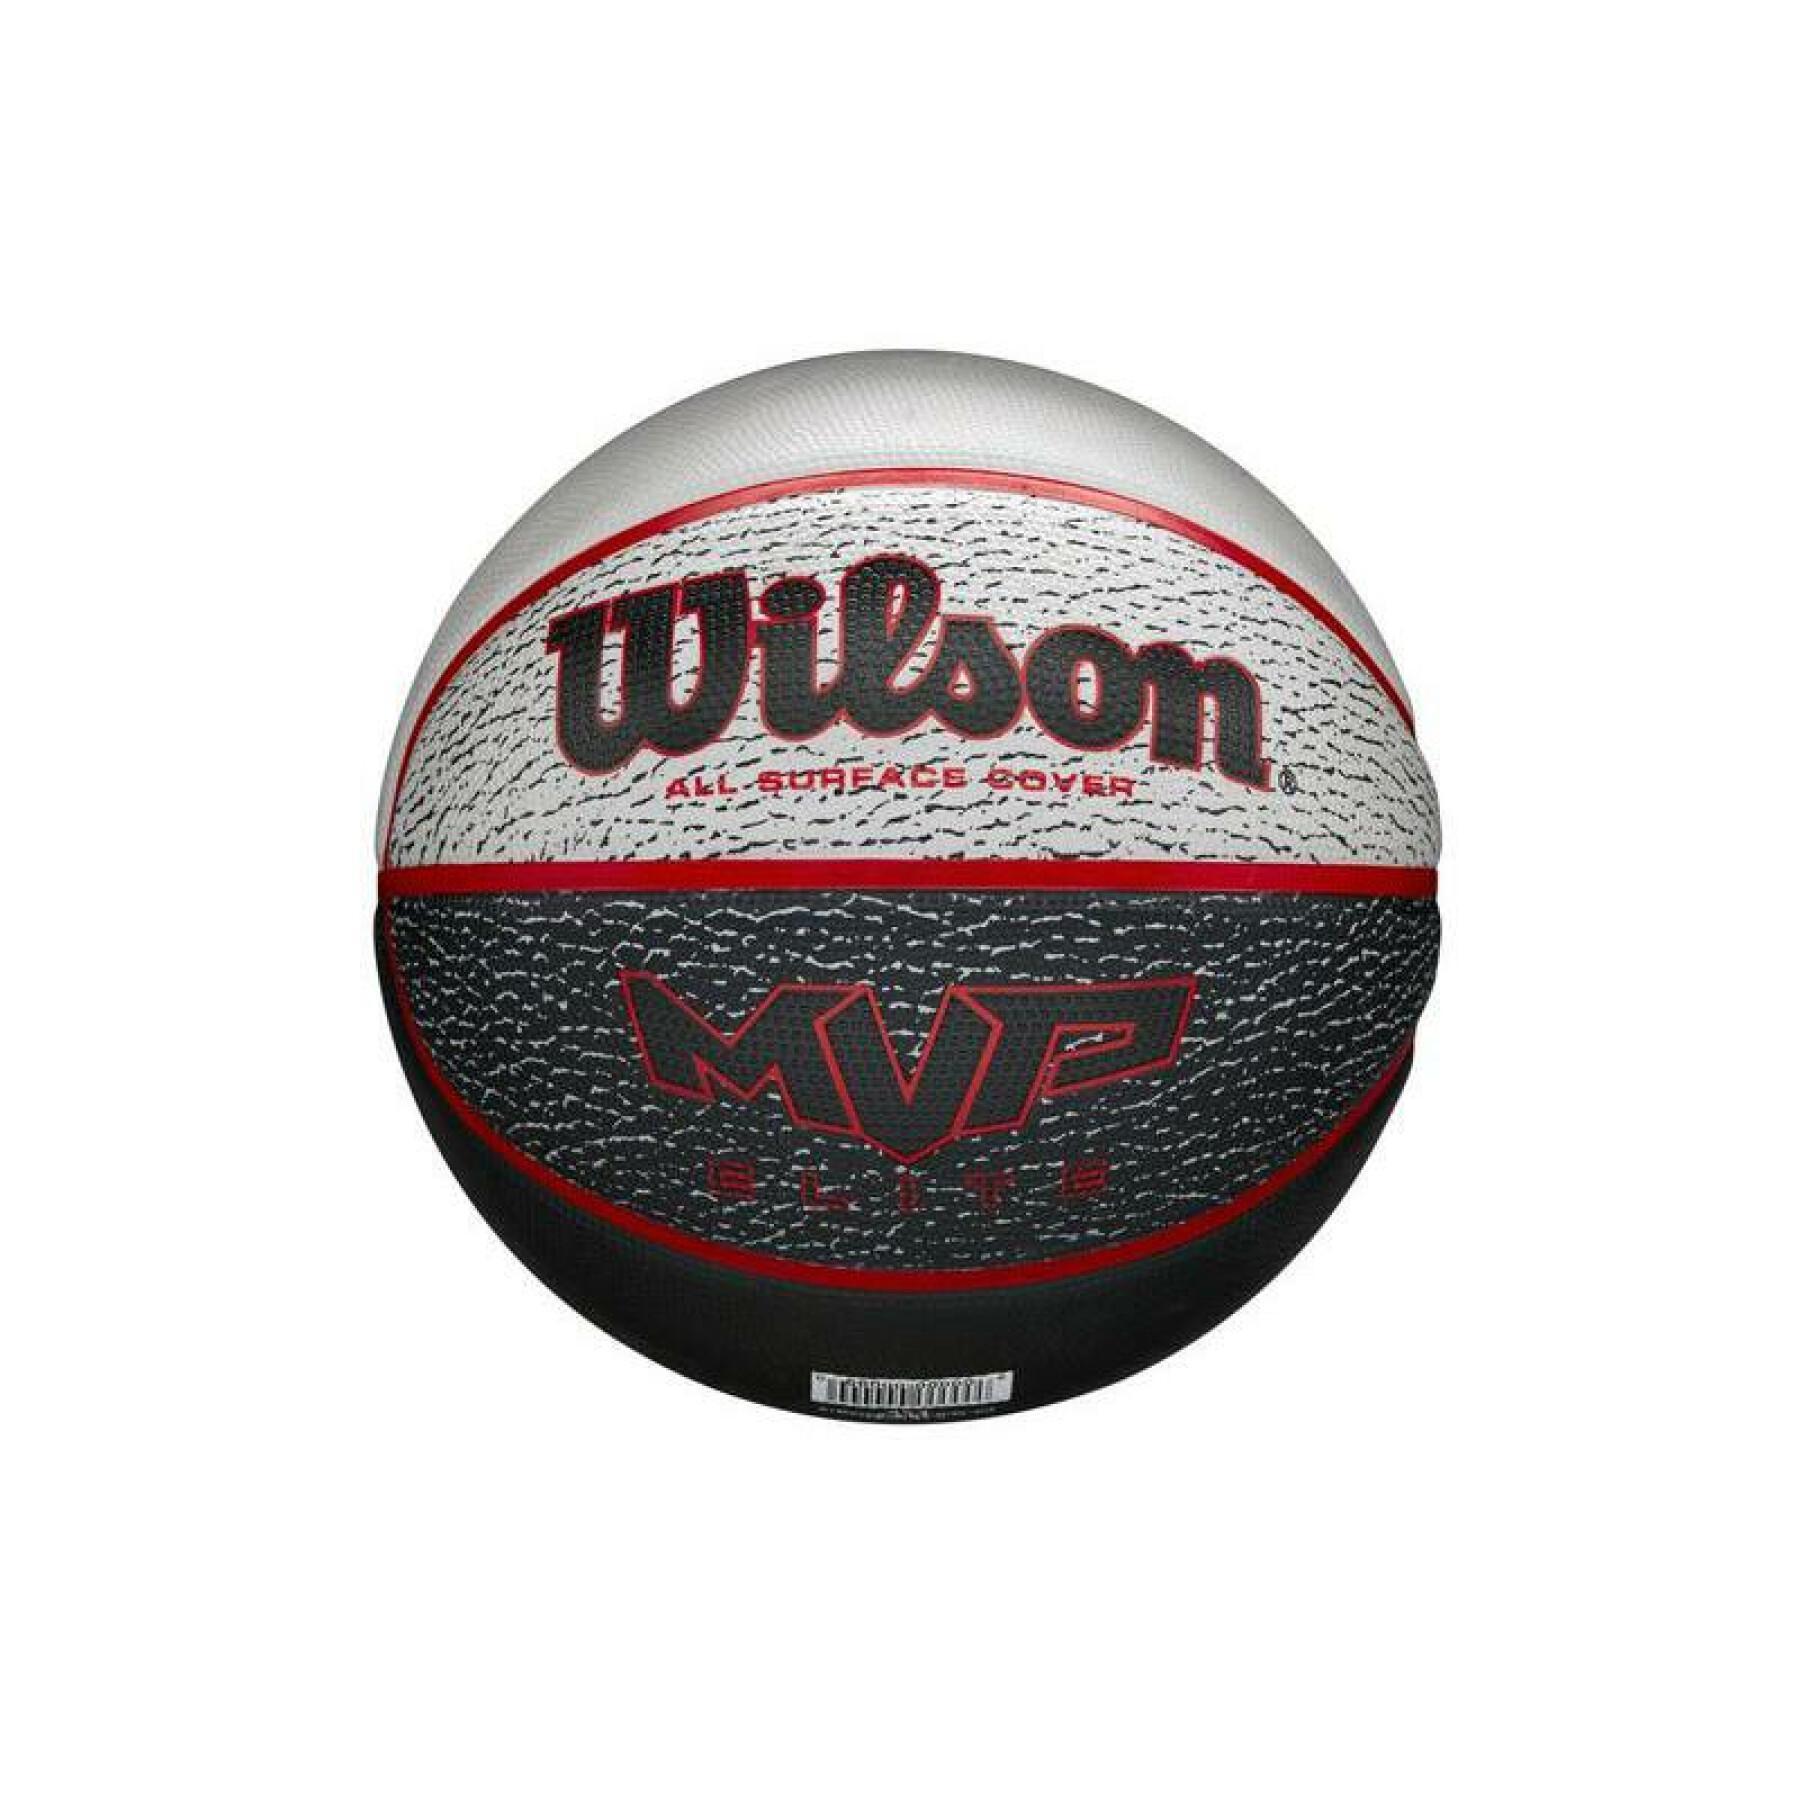 Ballon Wilson MVP Elite